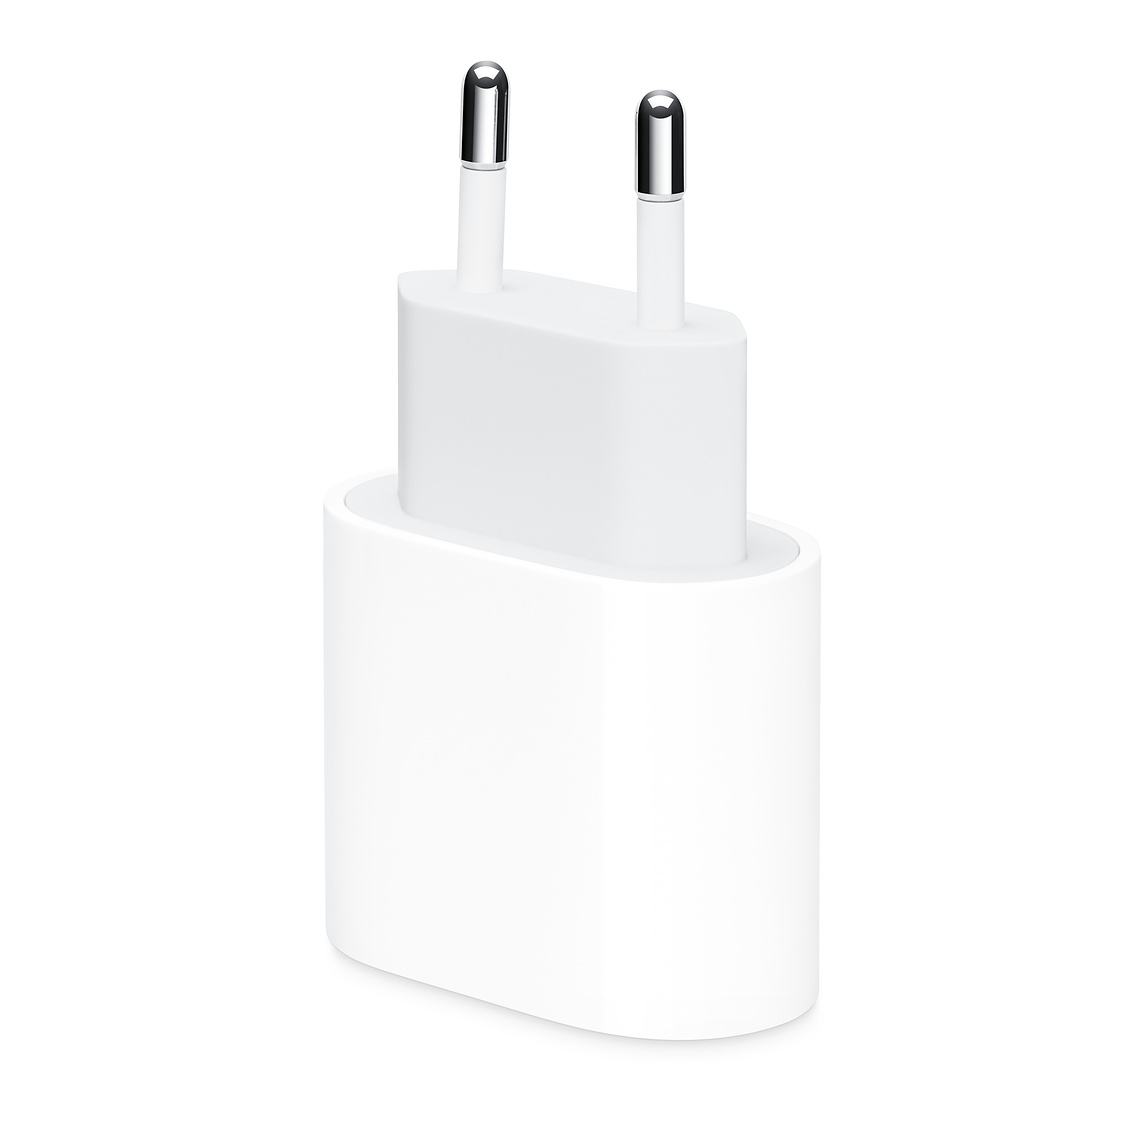 Apple 20 W USB-C Power Adapter 2020